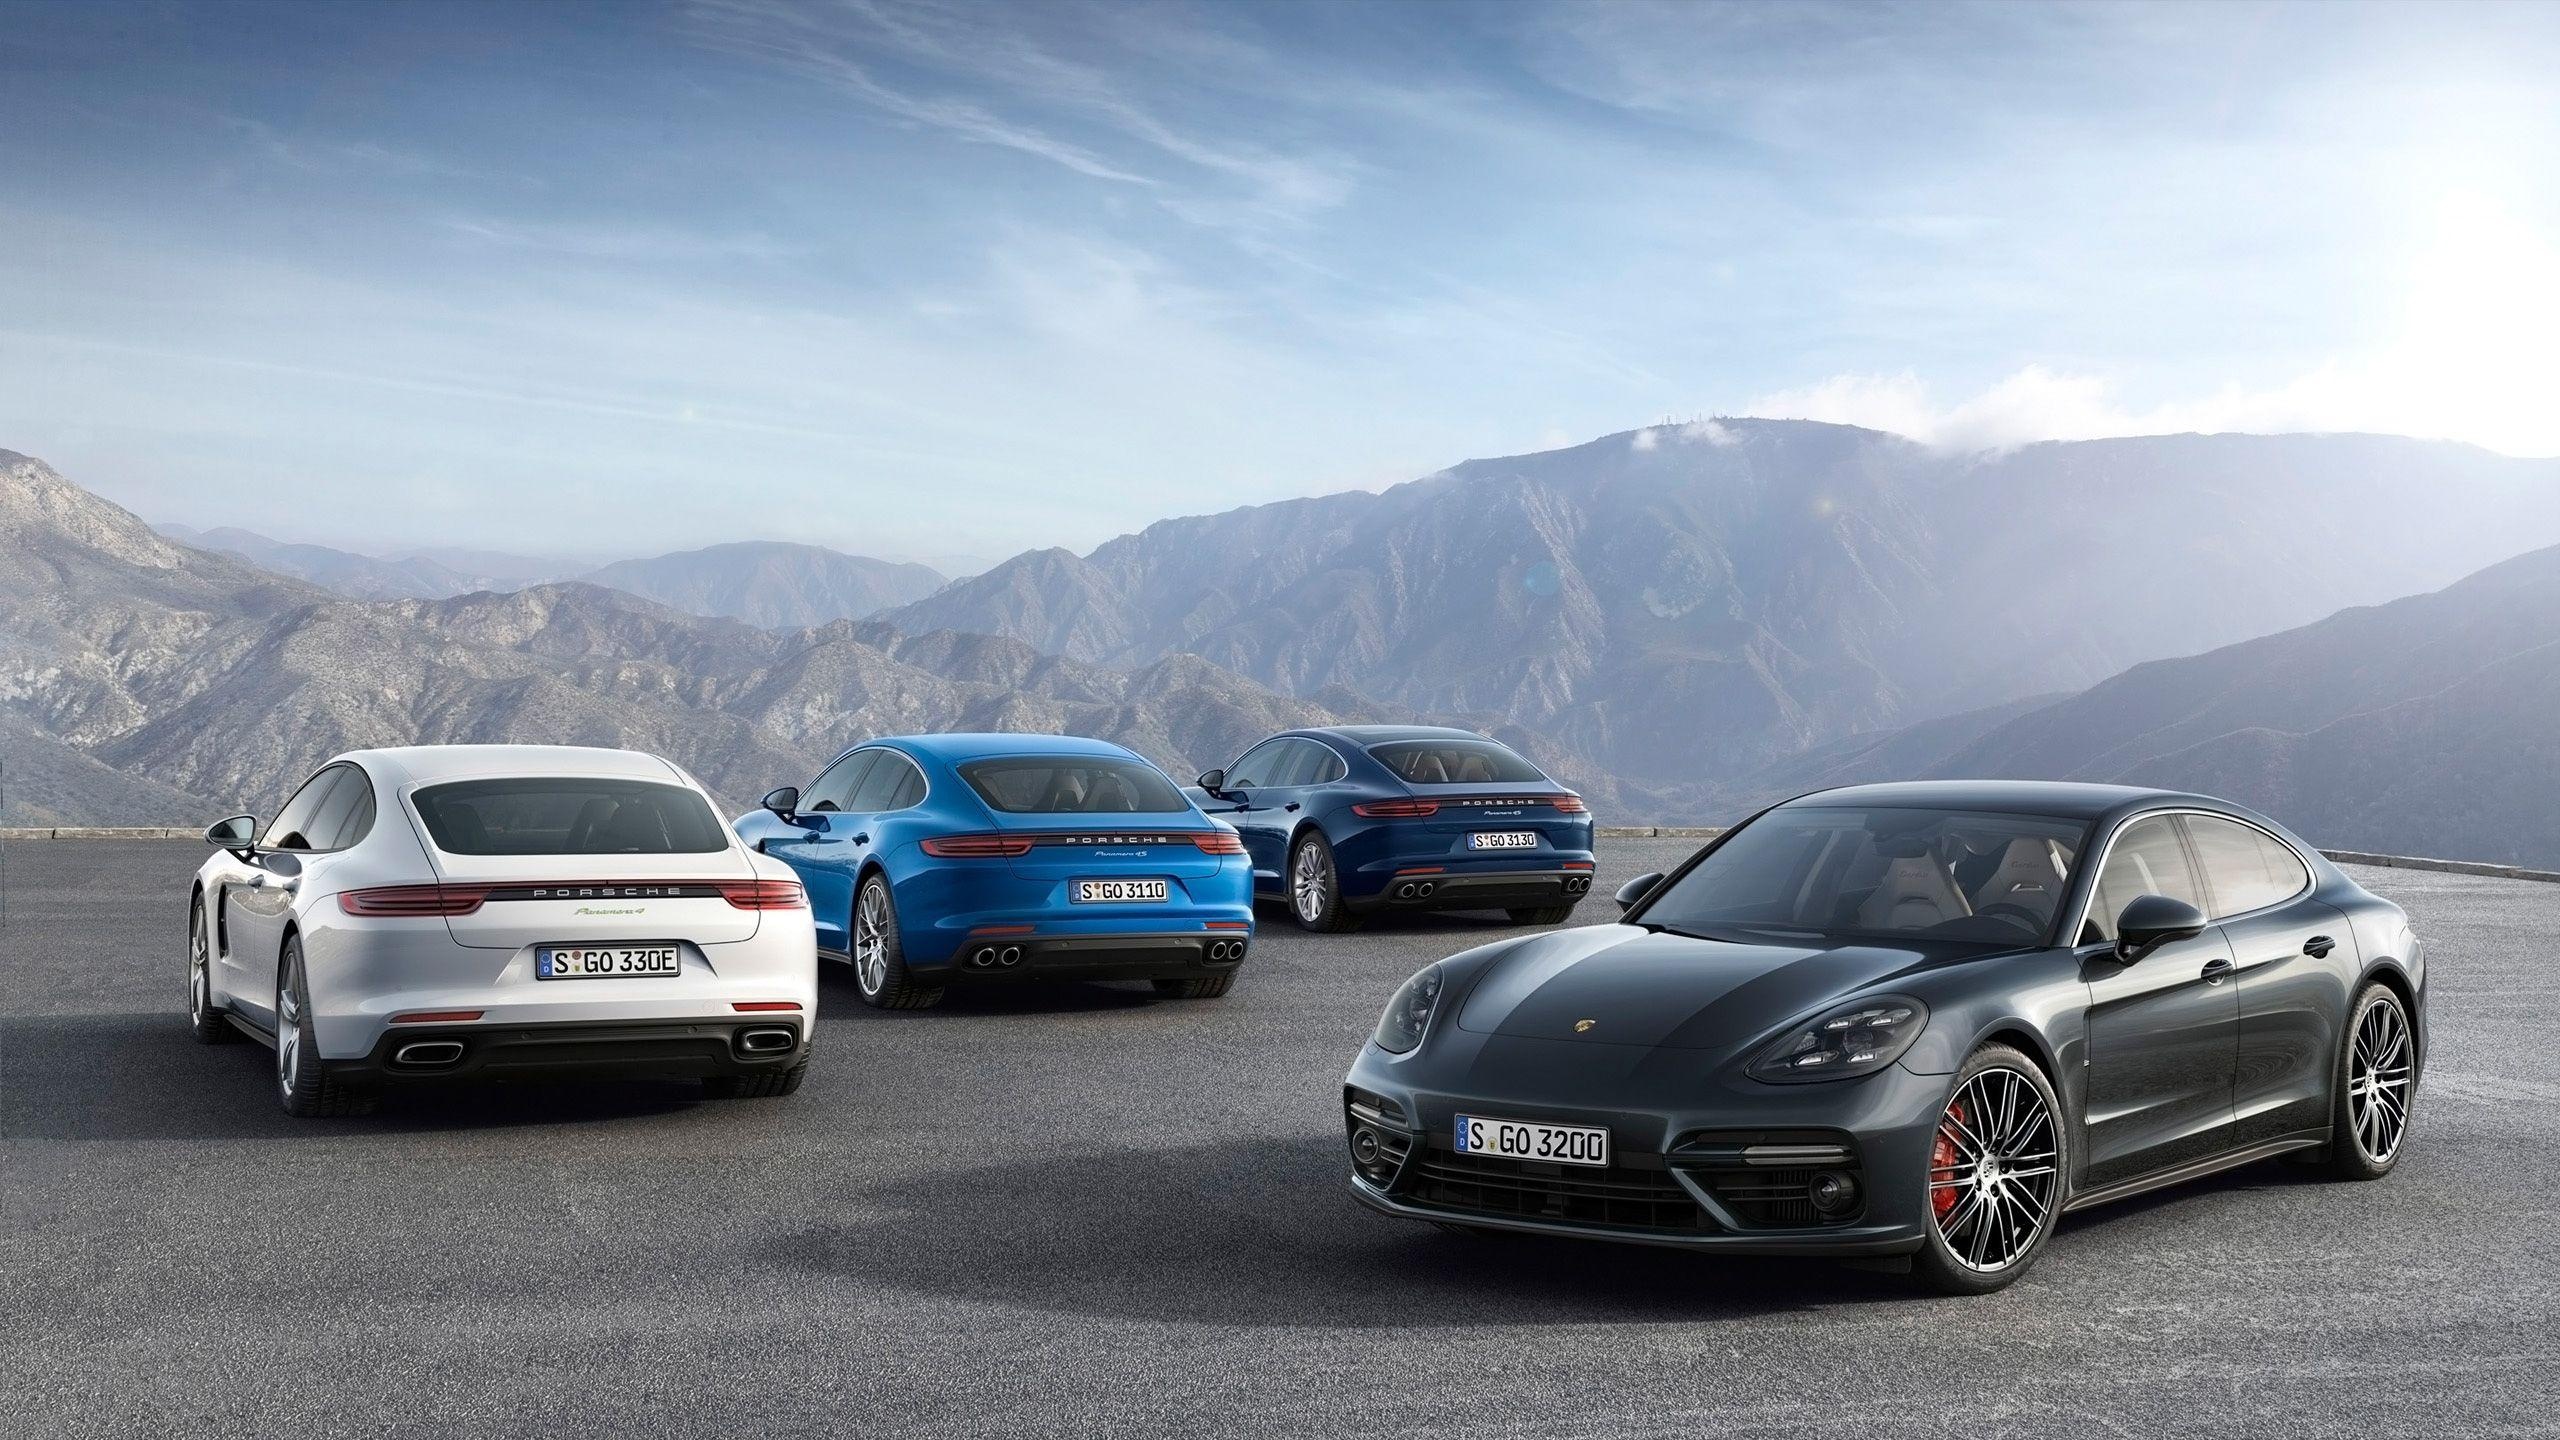 Porsche Panamera, Premium wallpapers, Luxury car, Sleek design, 2560x1440 HD Desktop